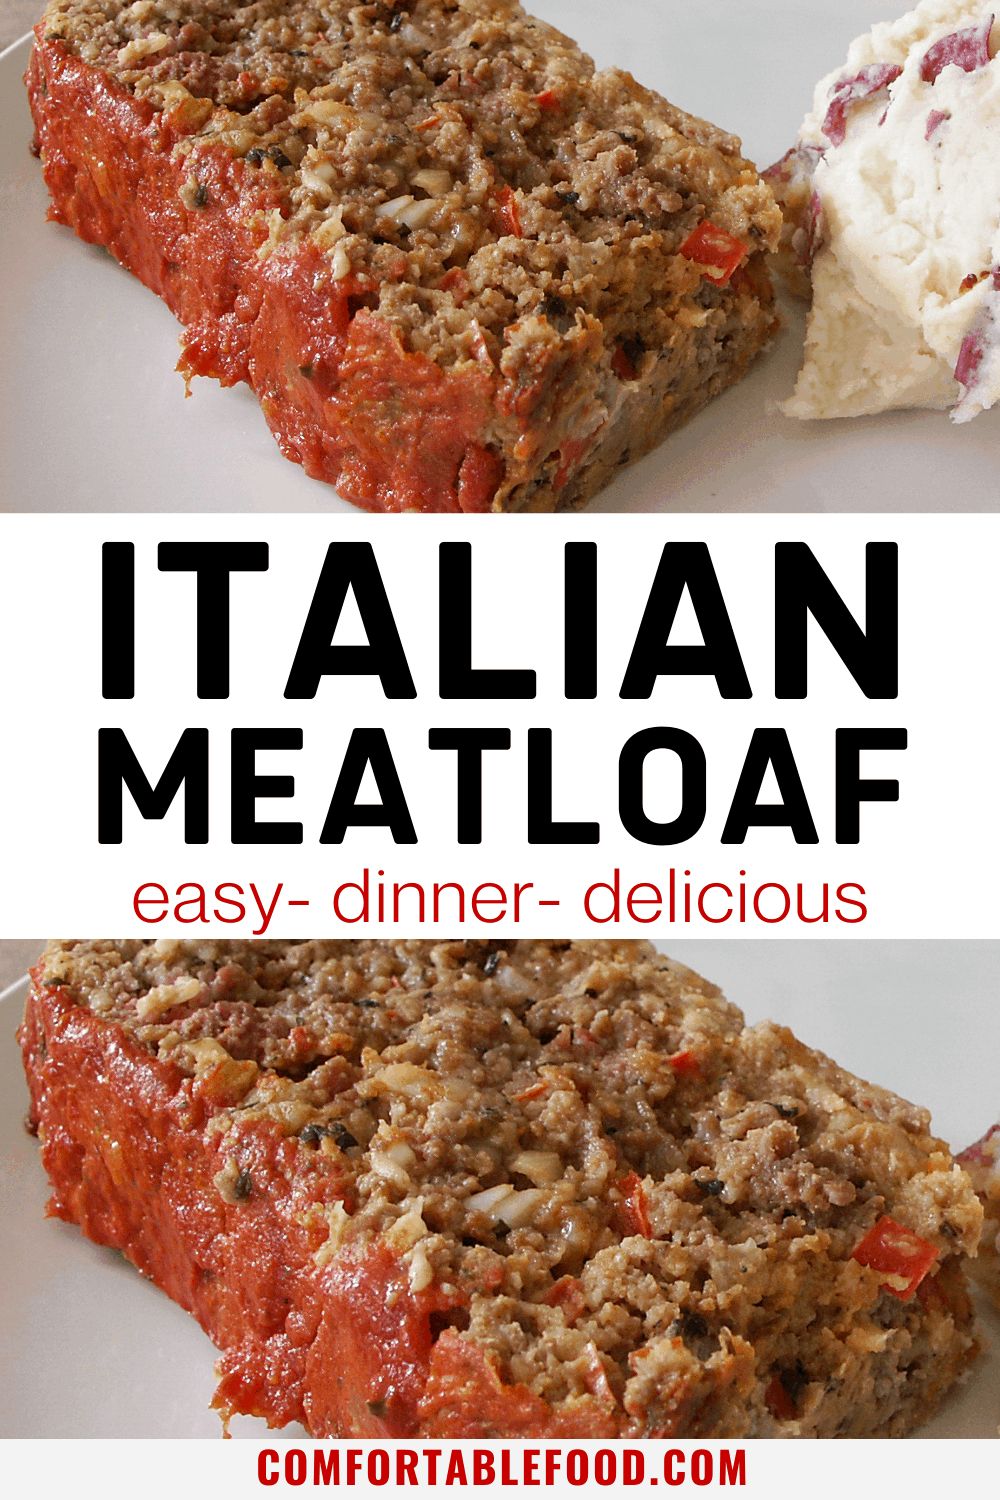 Sliced of italian meatloaf with marinara sauce on top